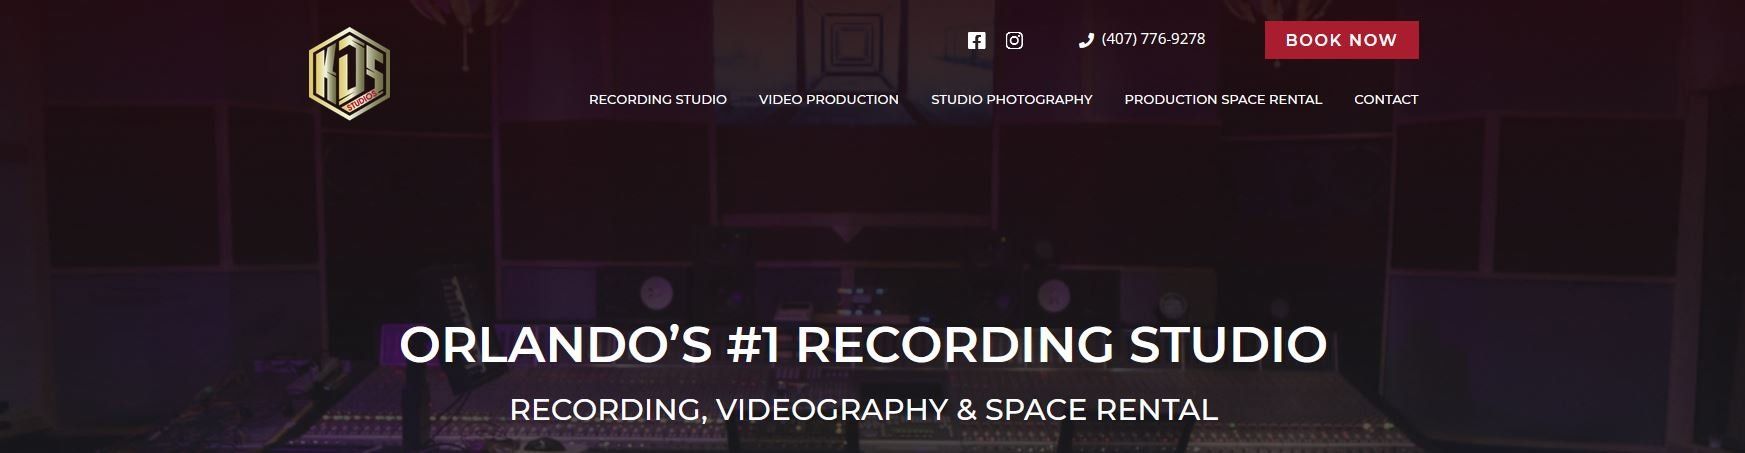 The website for orlando 's # 1 recording studio